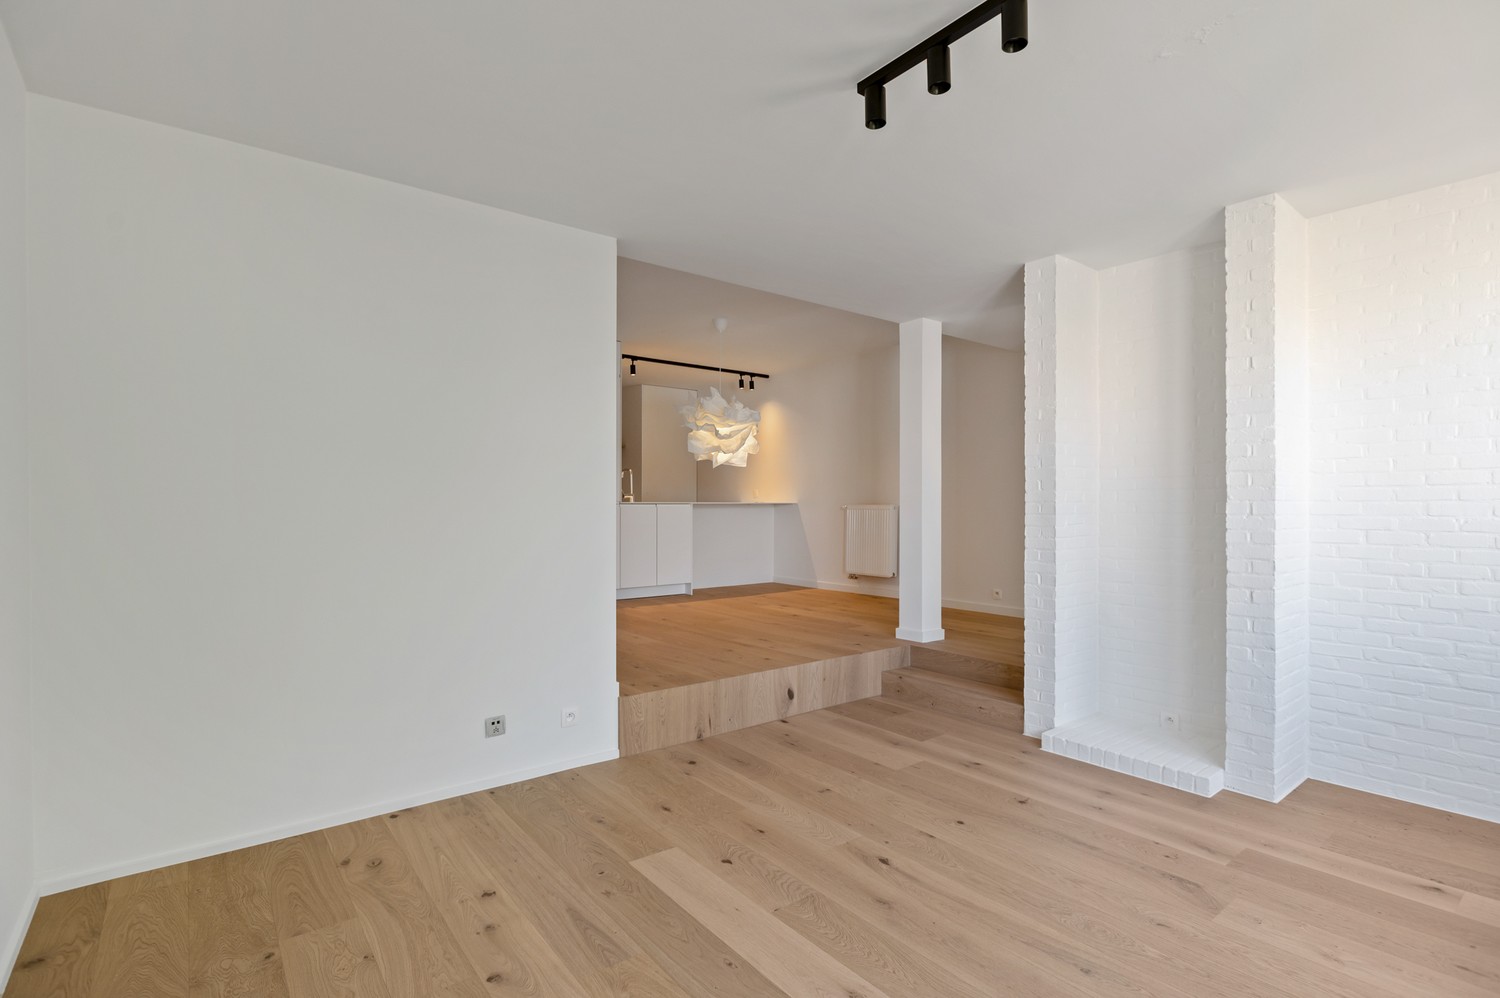 Hoogwaardig vernieuwd appartement met twee slaapkamers en terras in Deurne! afbeelding 7